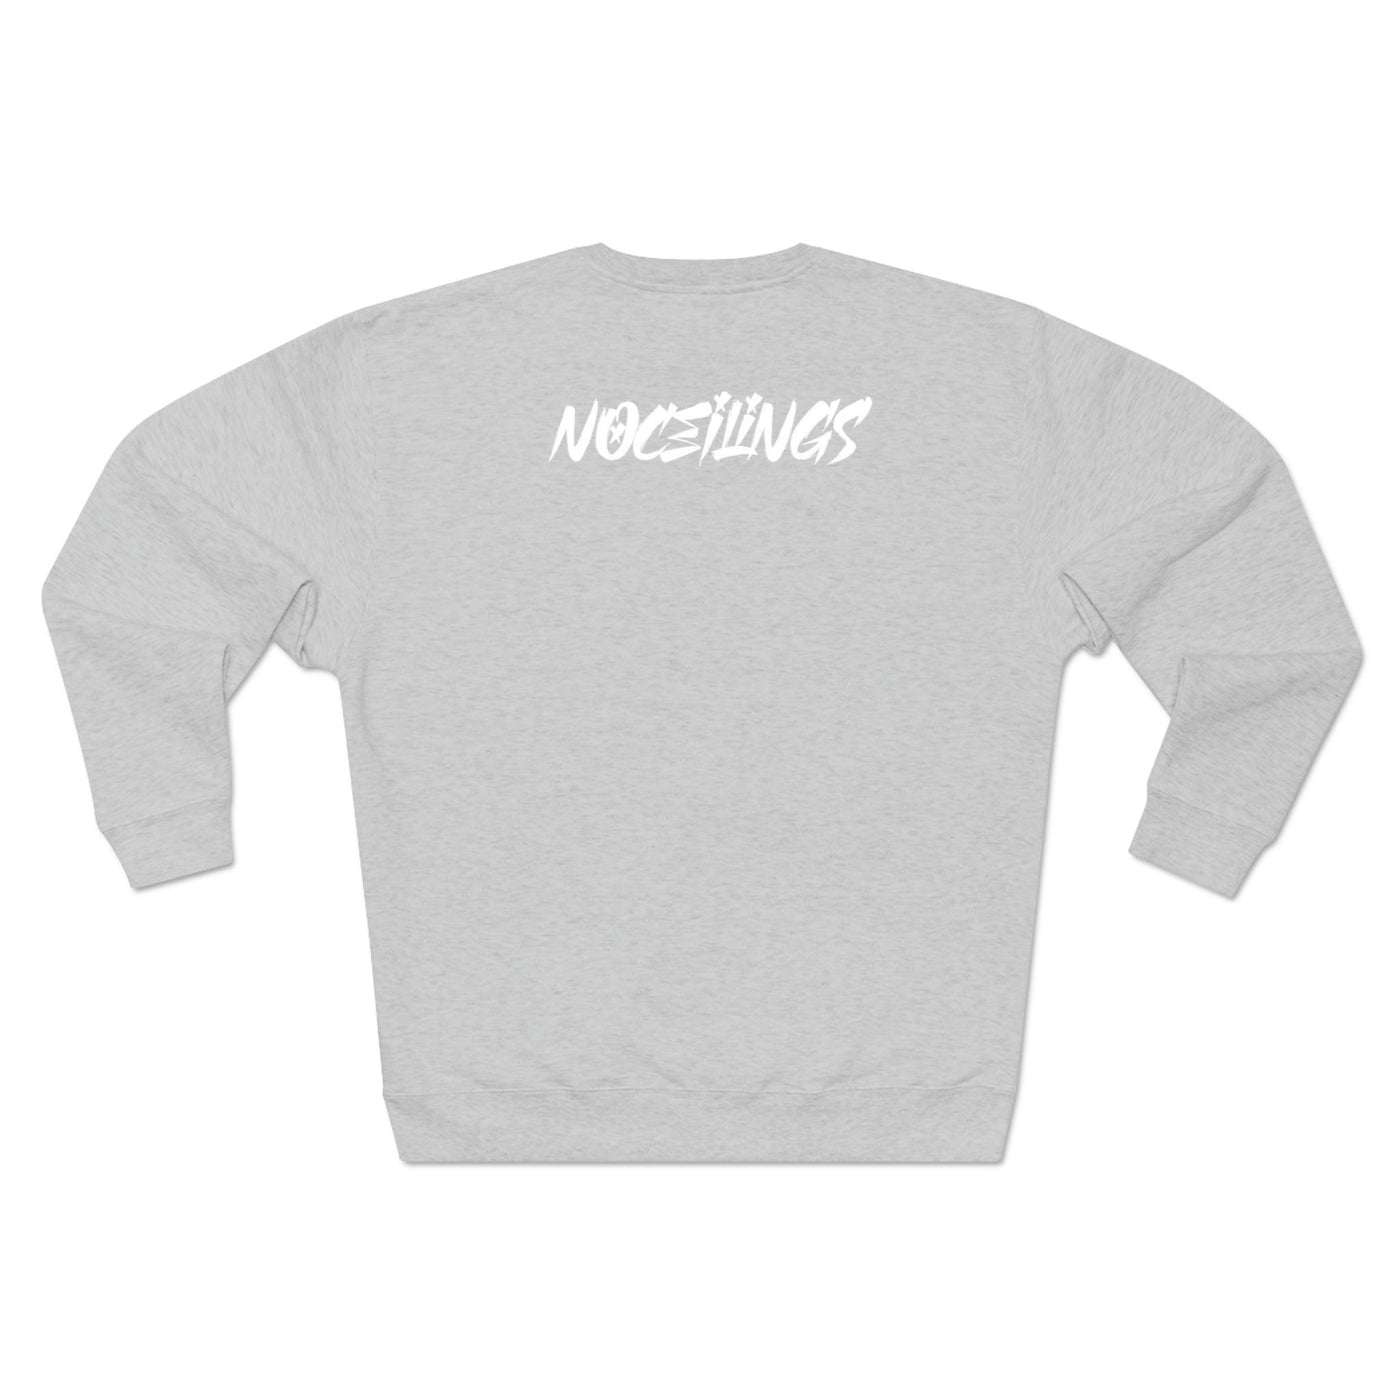 Never be afraid Unisex Premium Crewneck Sweatshirt - NoCeilingsClothing